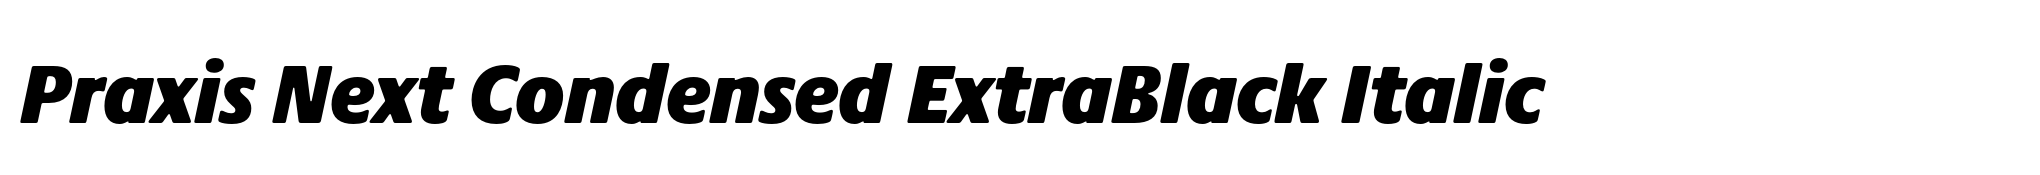 Praxis Next Condensed ExtraBlack Italic image